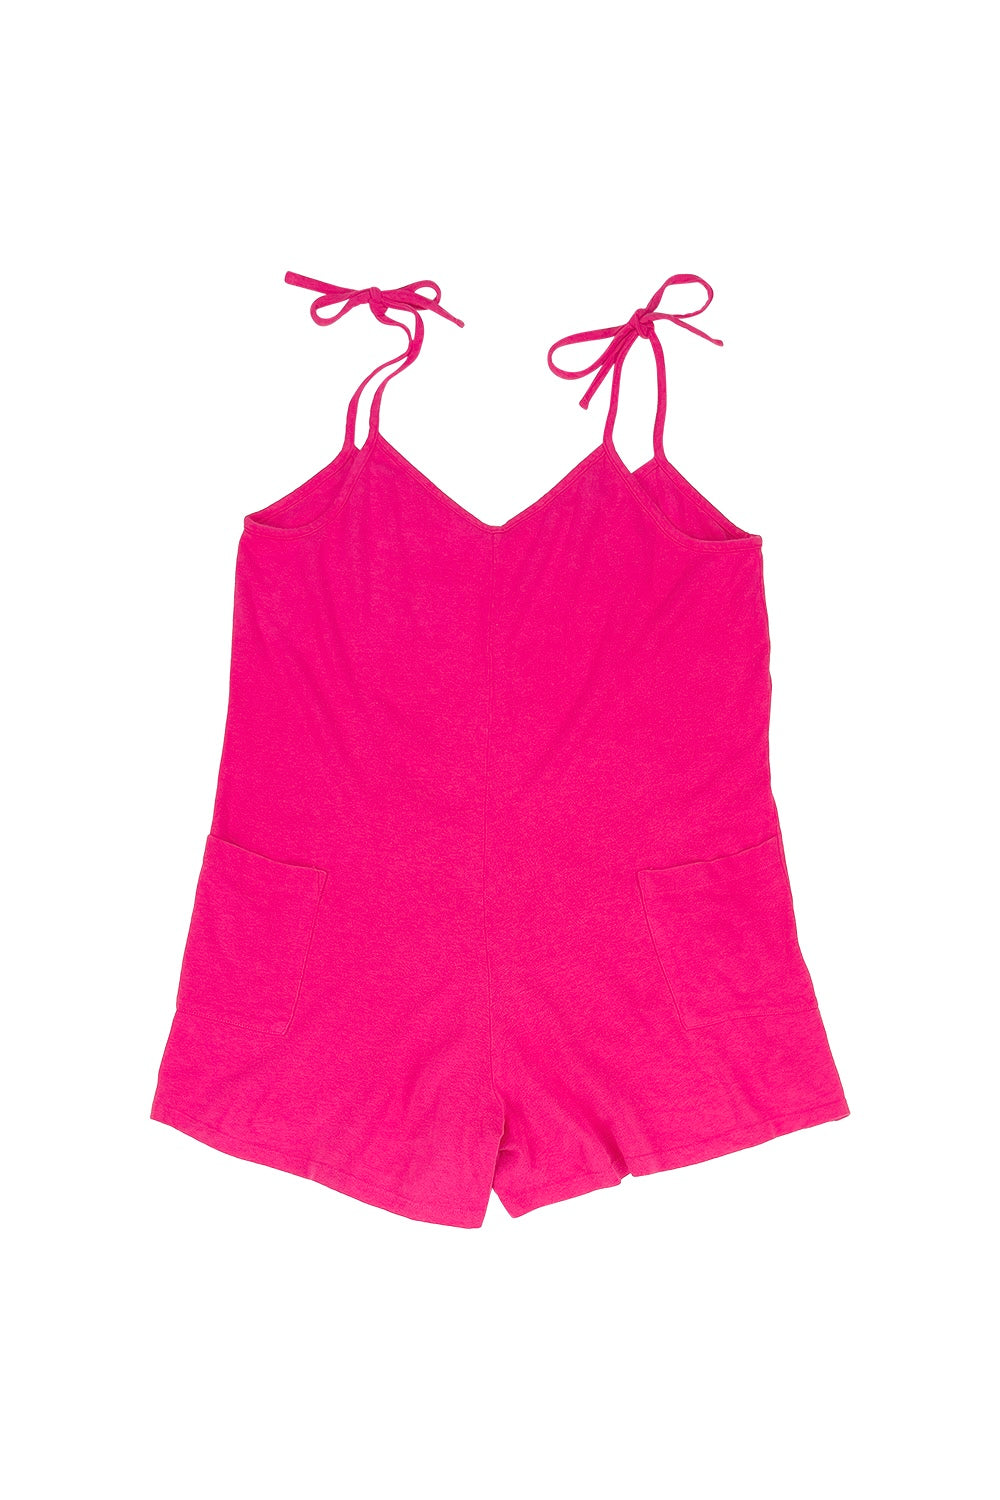 Sespe Short | Jungmaven Hemp Clothing & Accessories / Color: Pink Grapefruit